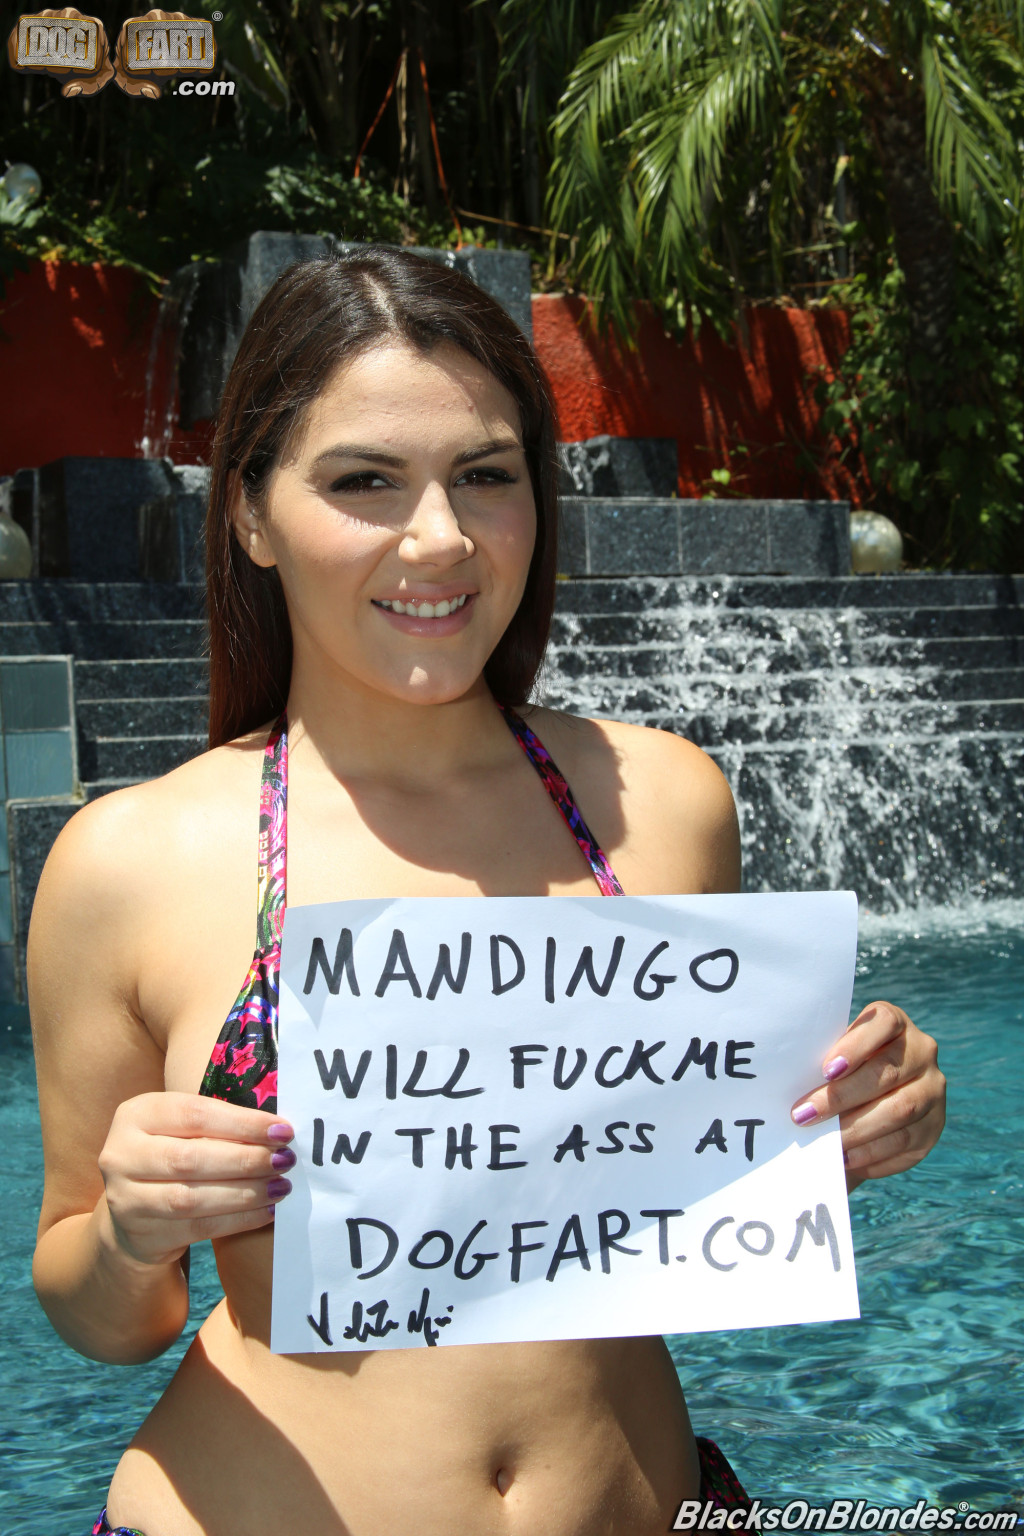 Valentina Nappi Hard Interracial Anal Porn Pictures, XXX Photos, Sex Images  #2791686 - PICTOA